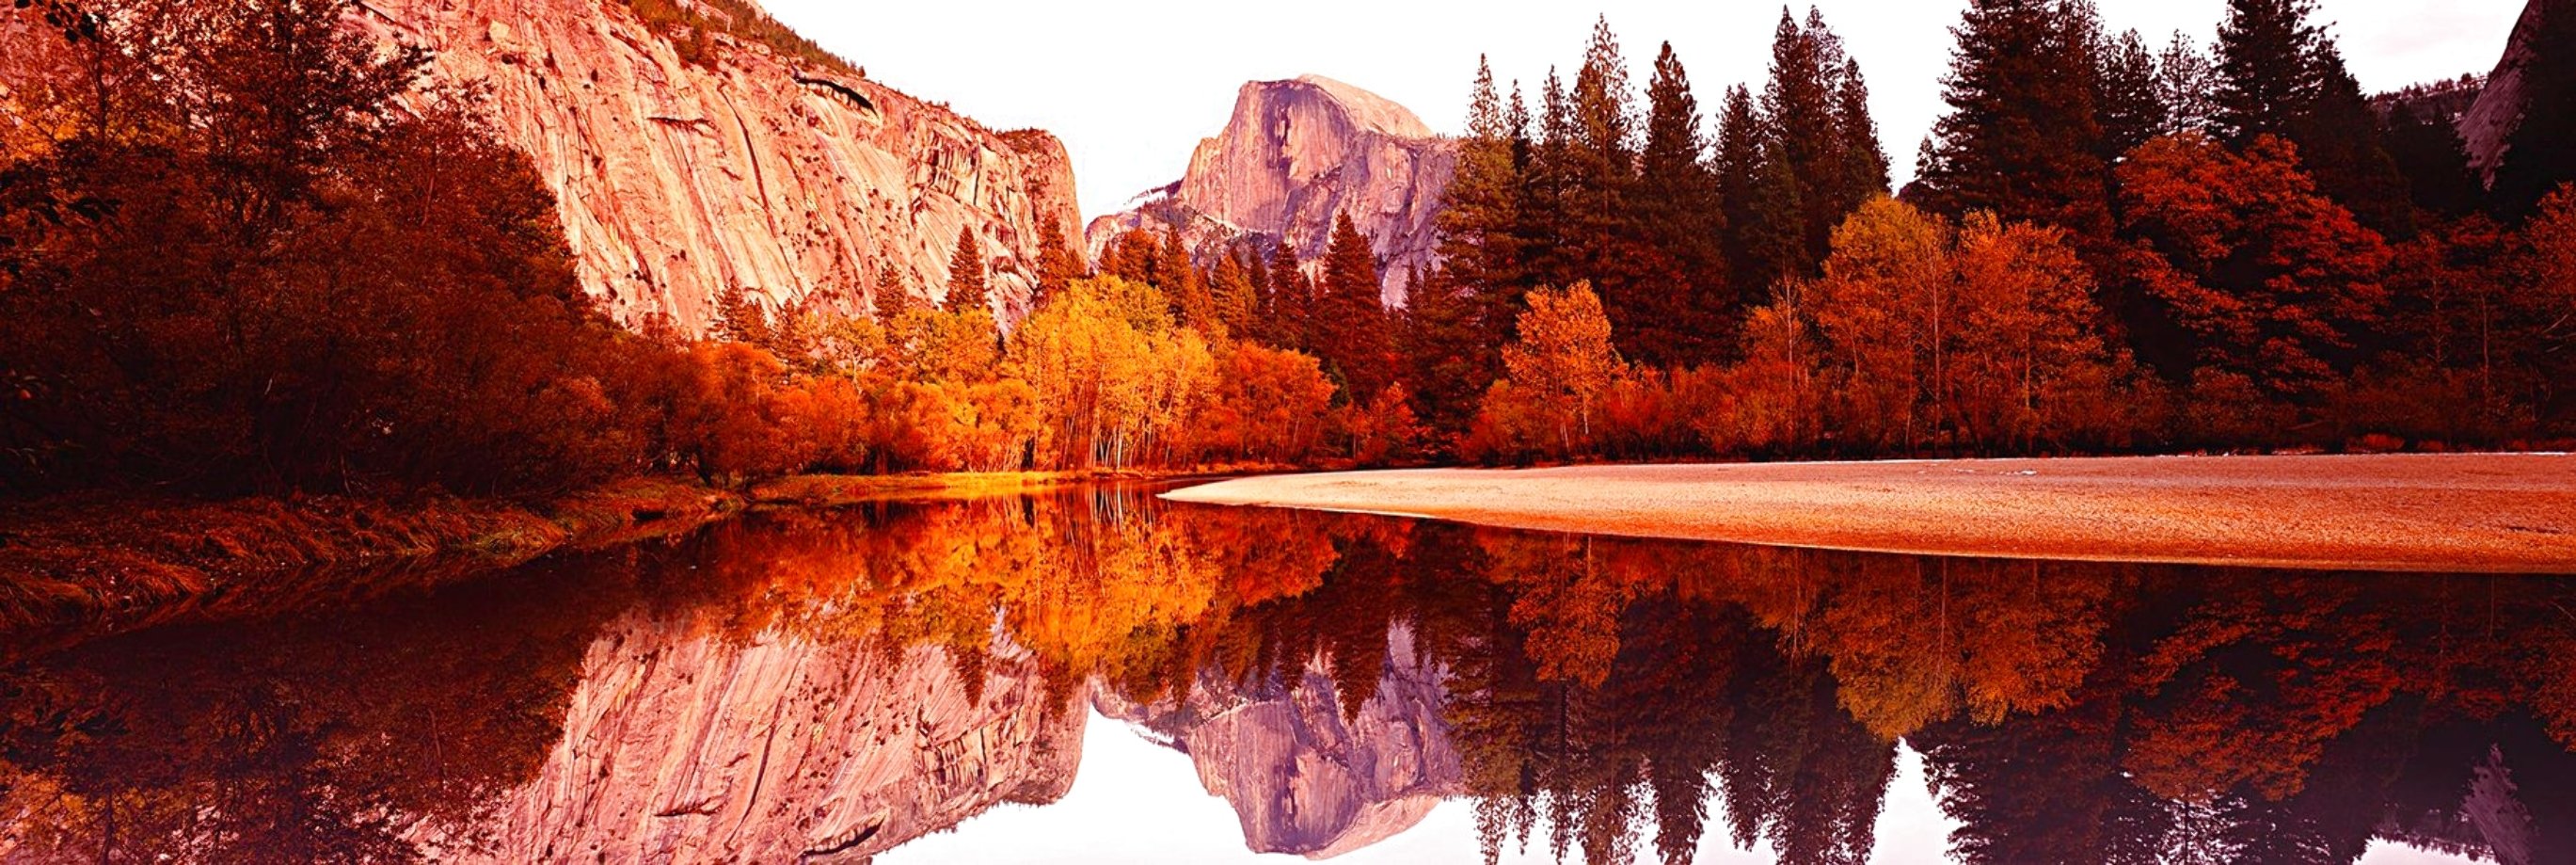 Yosemite Reflections 1.5M  Huge Panorama by Peter Lik